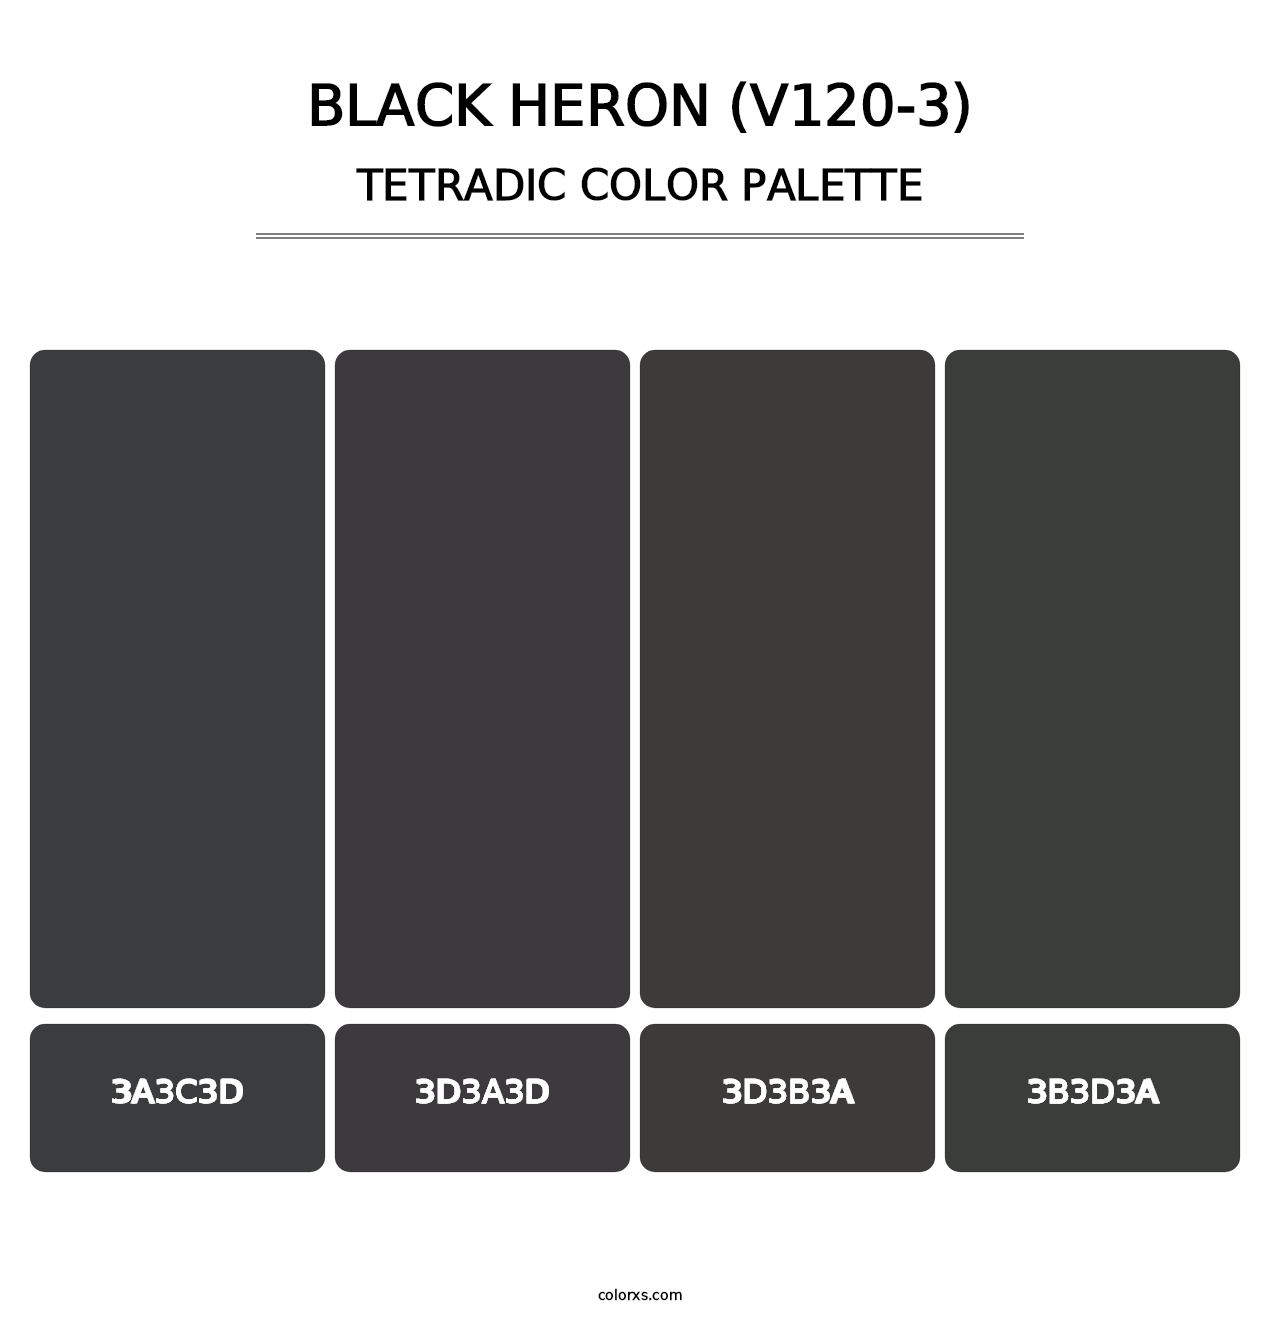 Black Heron (V120-3) - Tetradic Color Palette